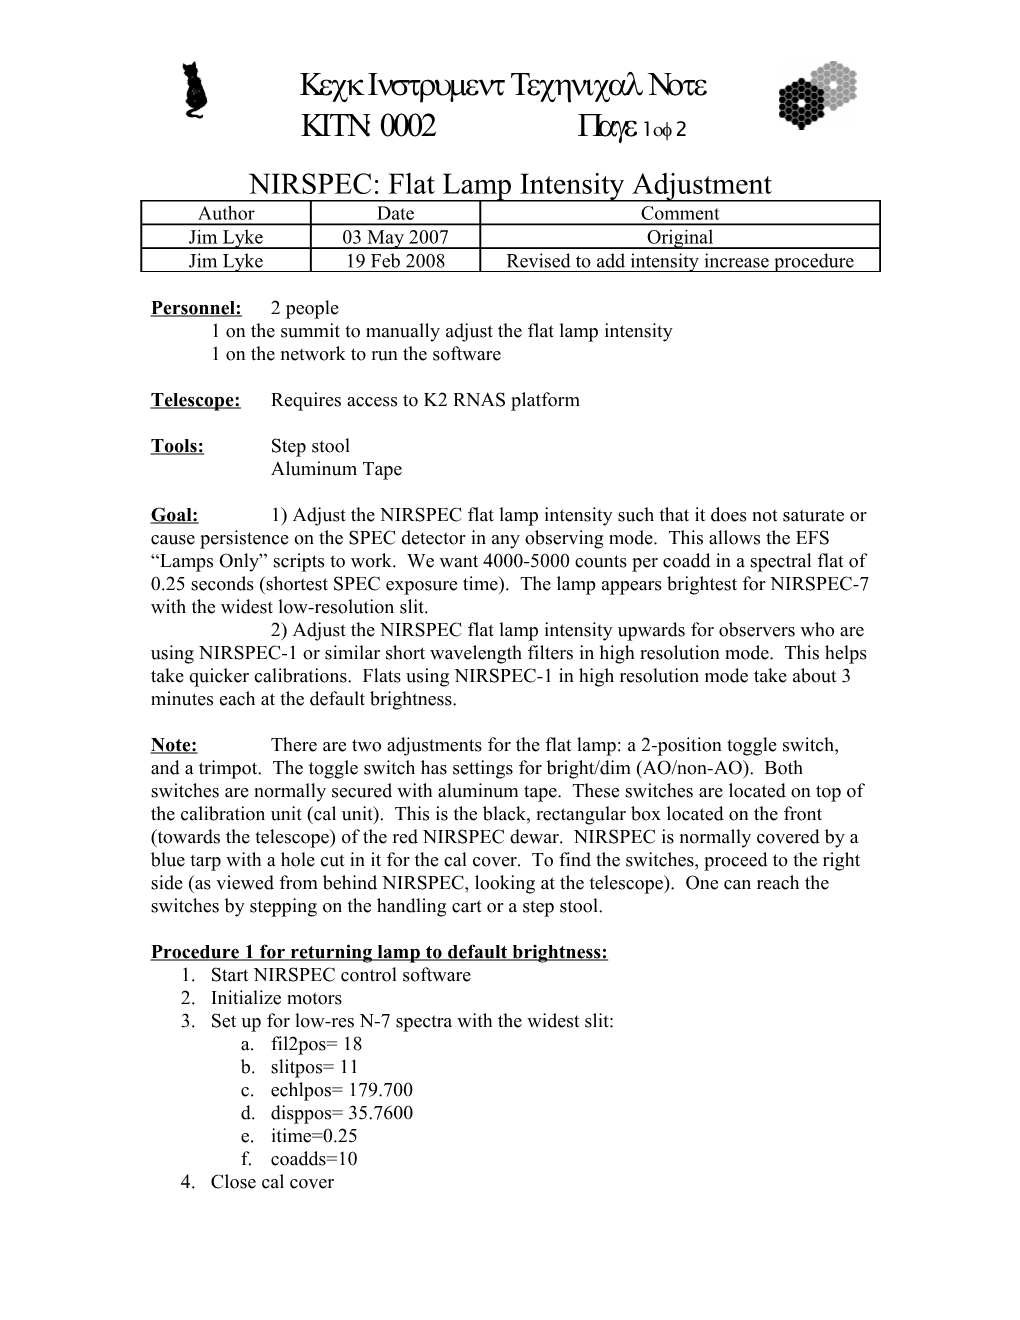 NIRSPEC: Flat Lamp Intensity Adjustment